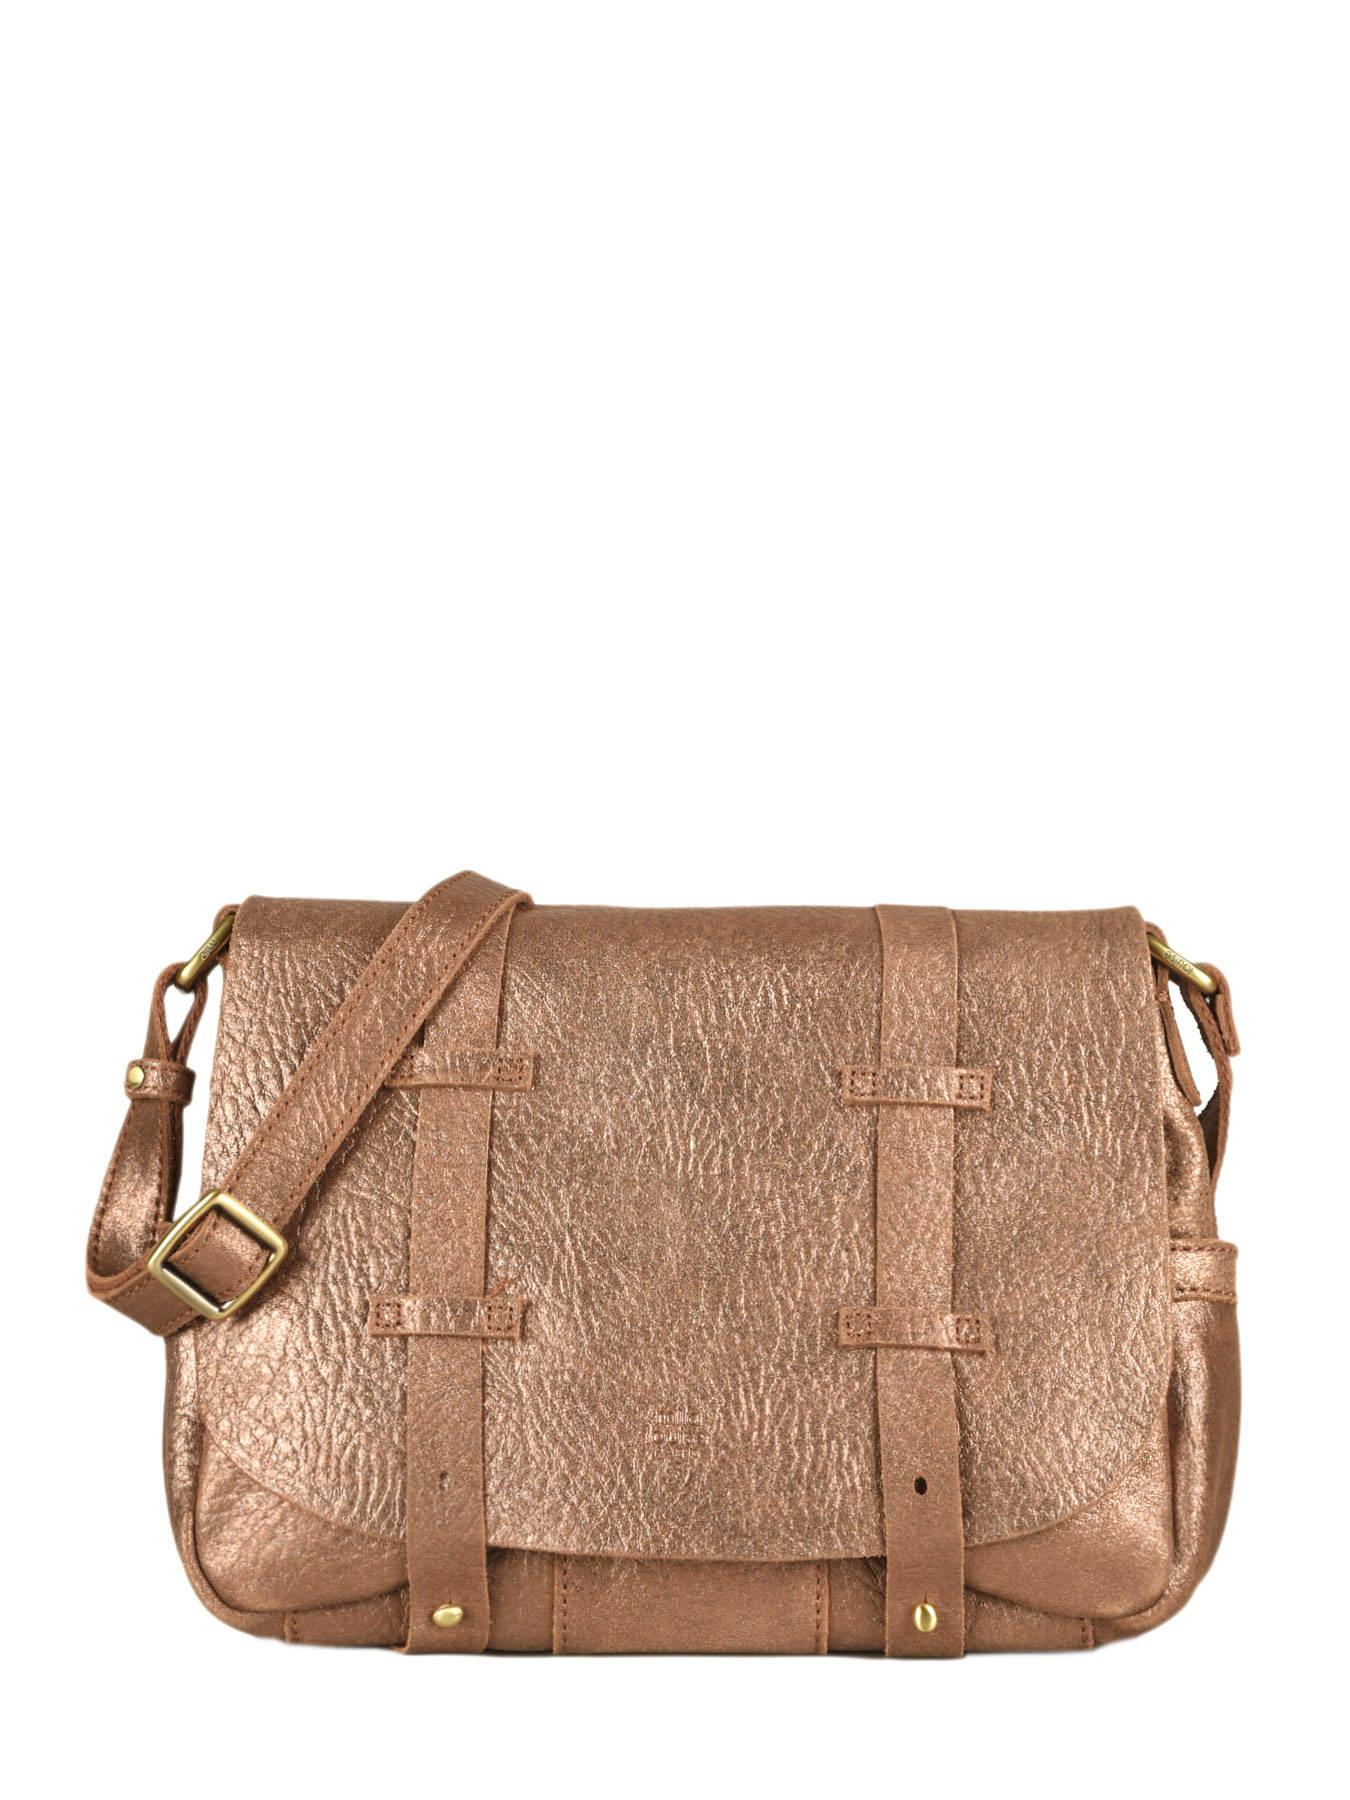 MILA LOUISE Handbags for Women - Vestiaire Collective